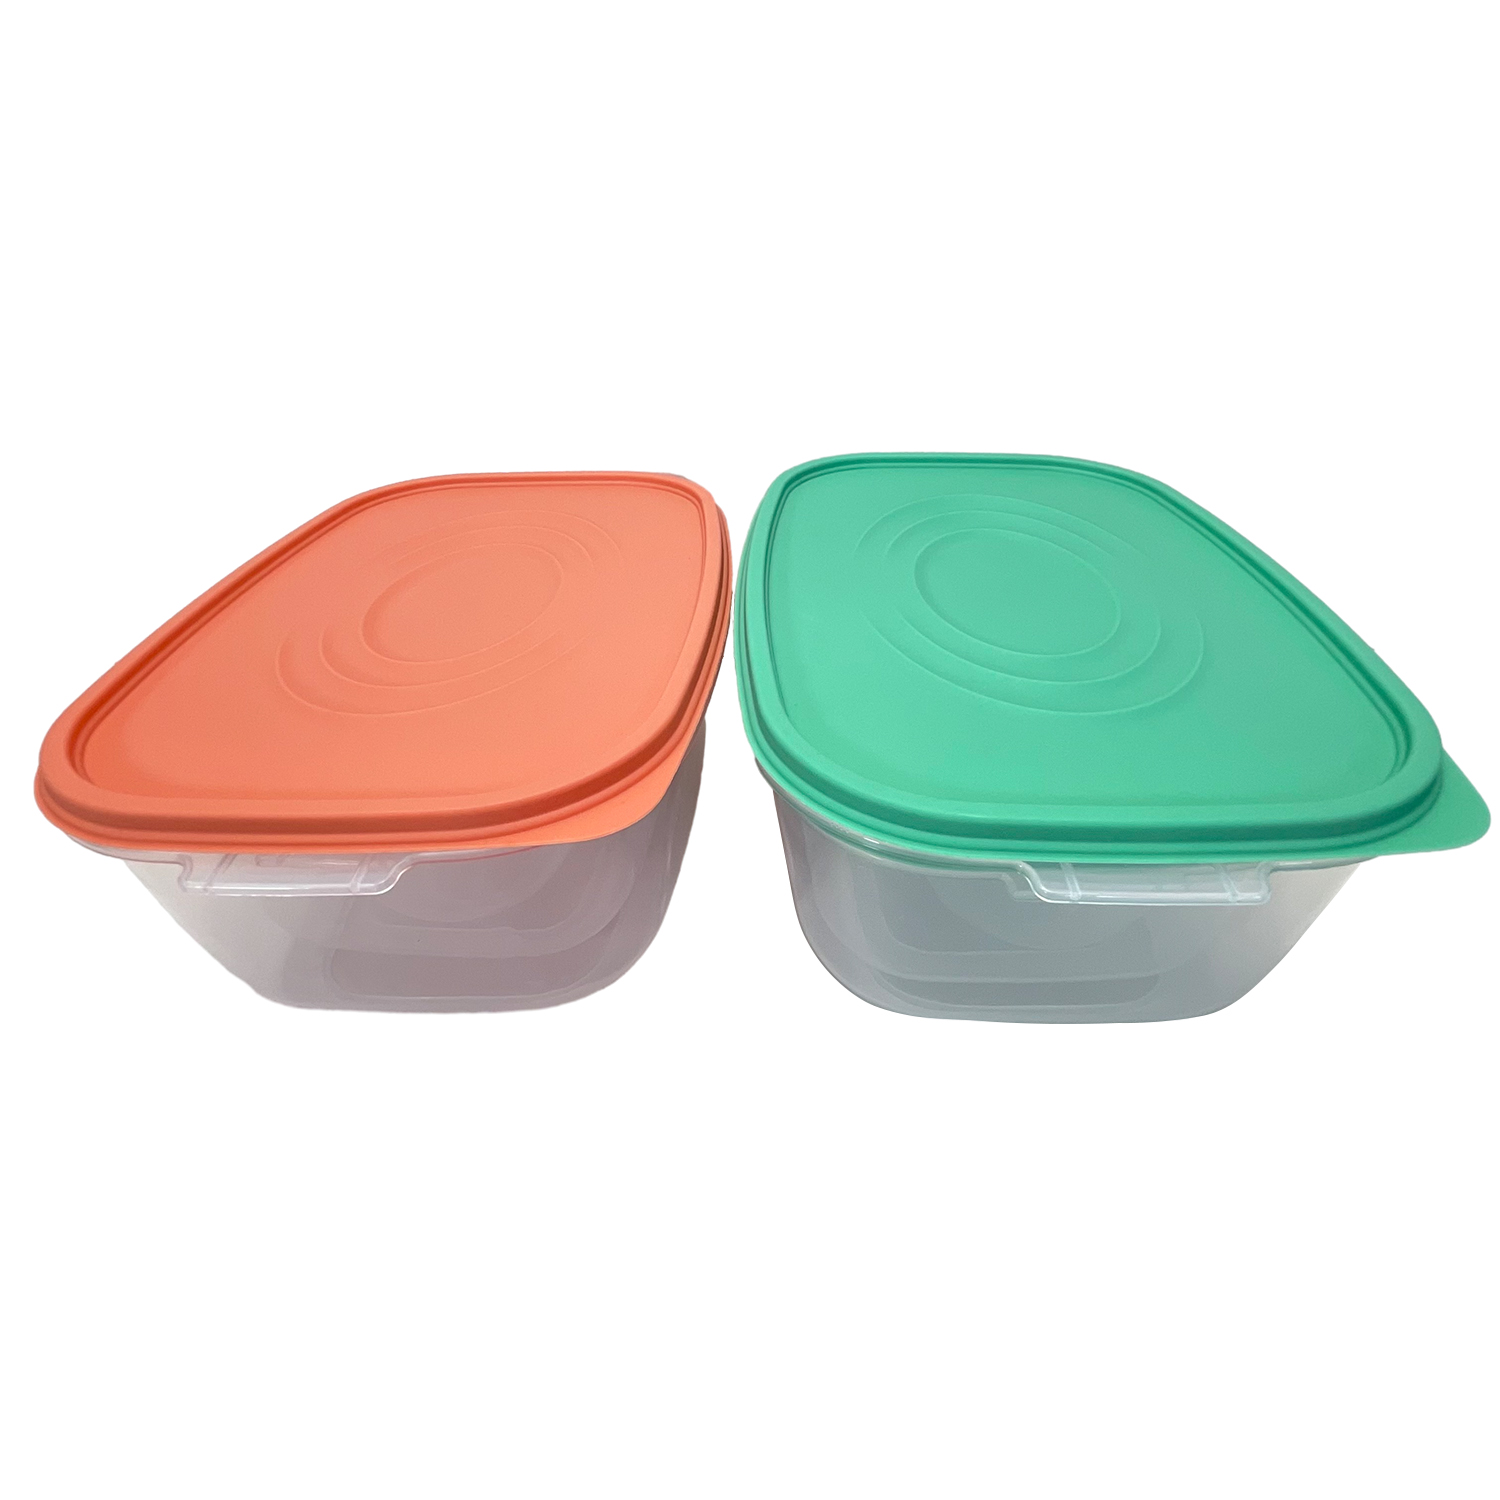 3 Pcs/Set Fresh-Keeping Storage Box Plastic Food Container Refrigerator Crisper Fruit Vegetable Storage Container